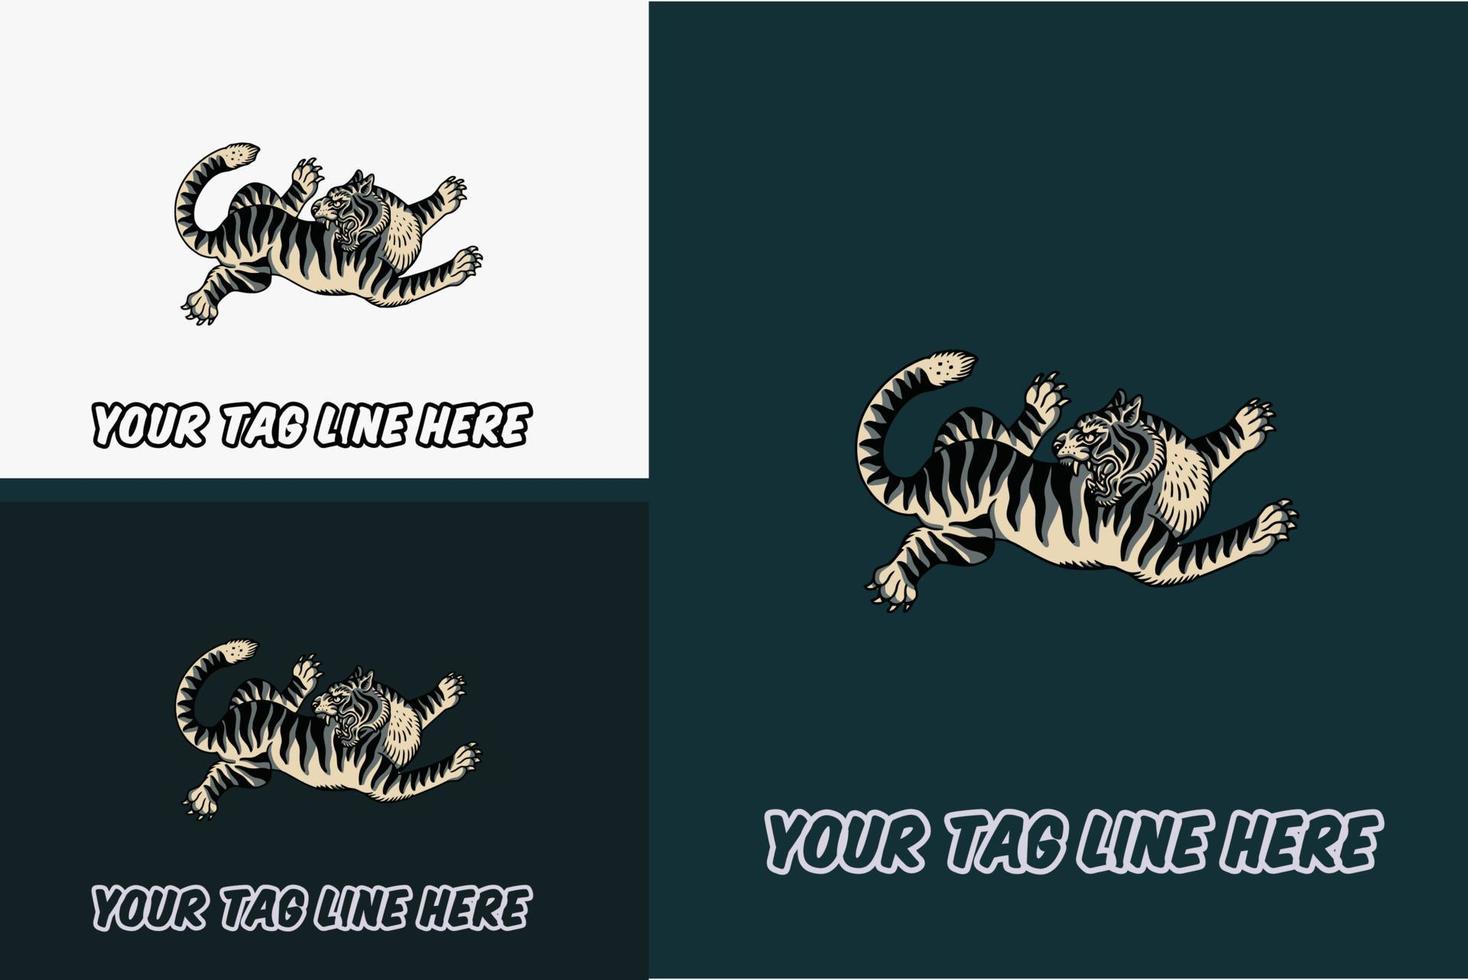 artwork design of tiger jump vector